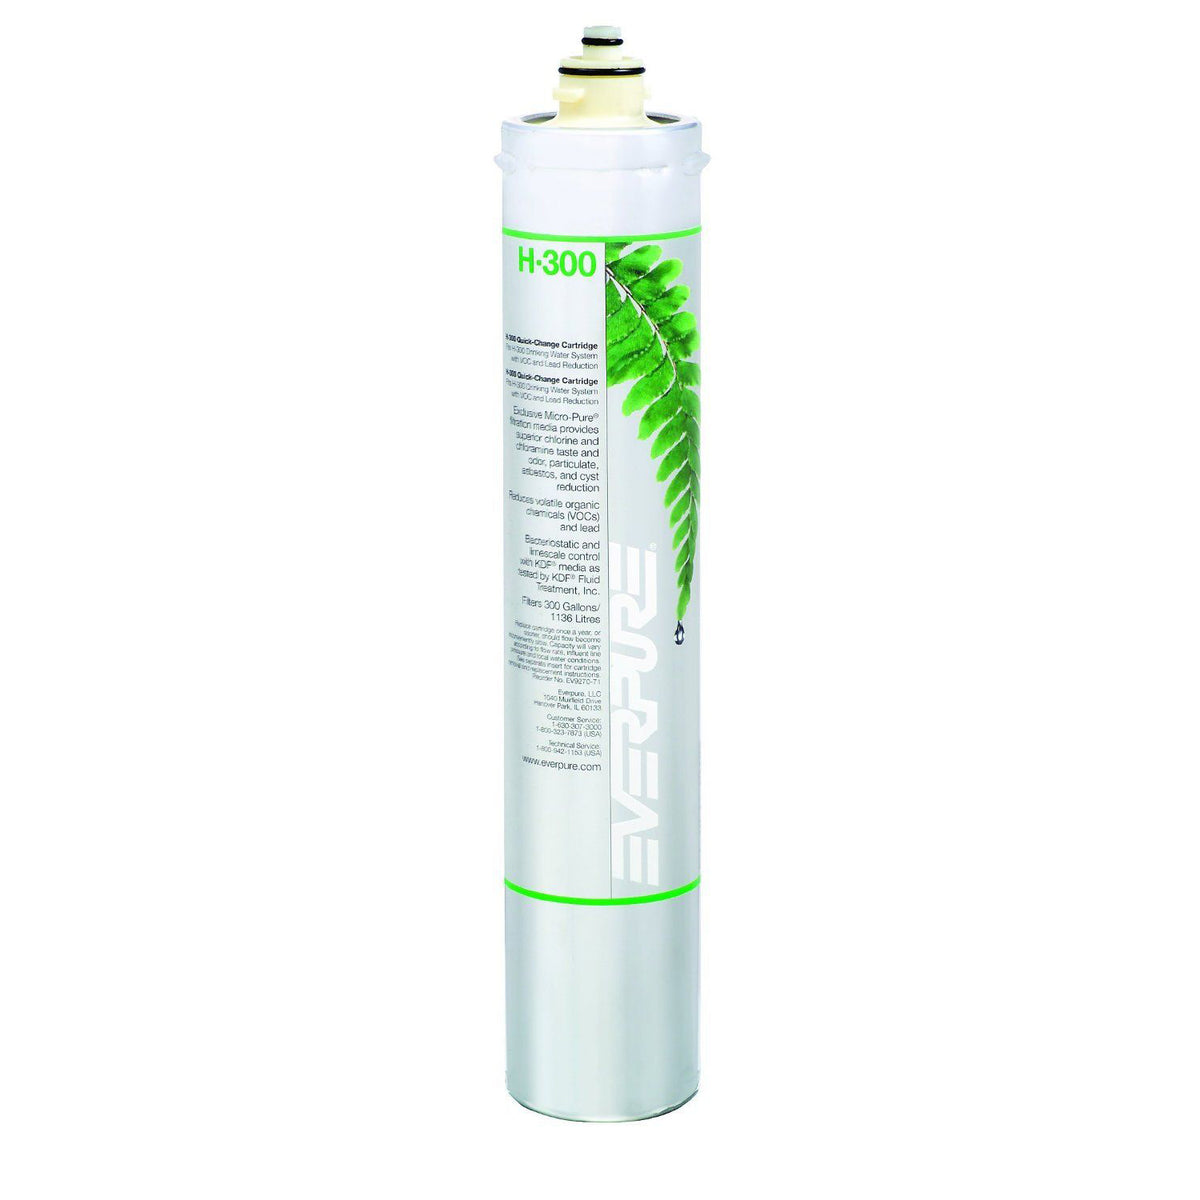 EV9270-72 H-300 Everpure Replacement Water Filter Cartridge